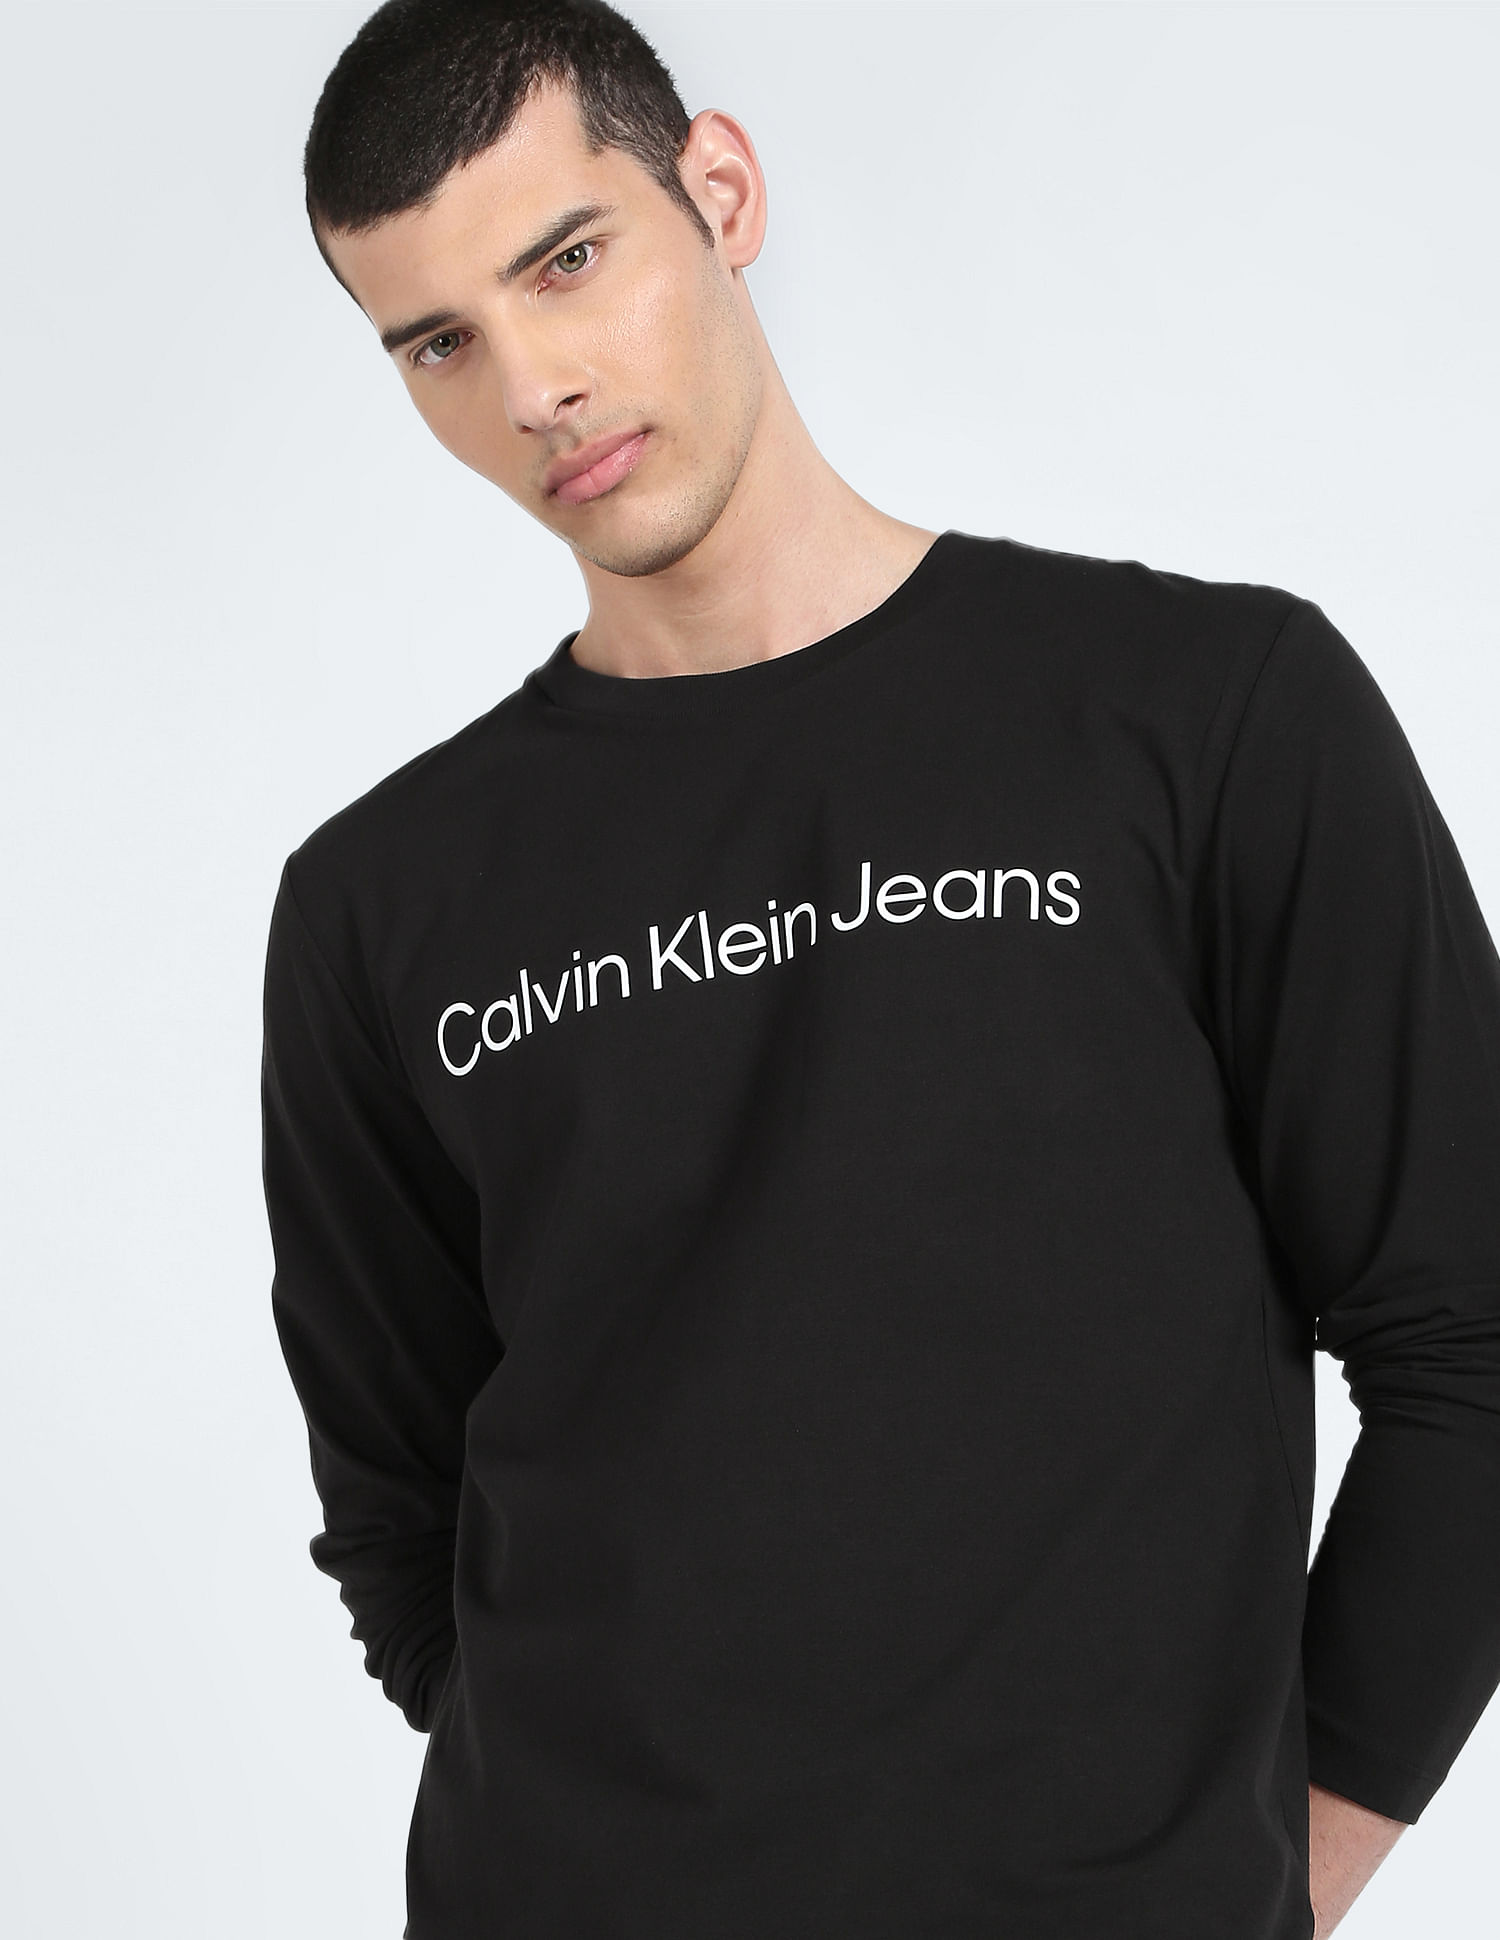 Buy Calvin Klein Jeans Cotton Instil Logo Neck T-Shirt Crew